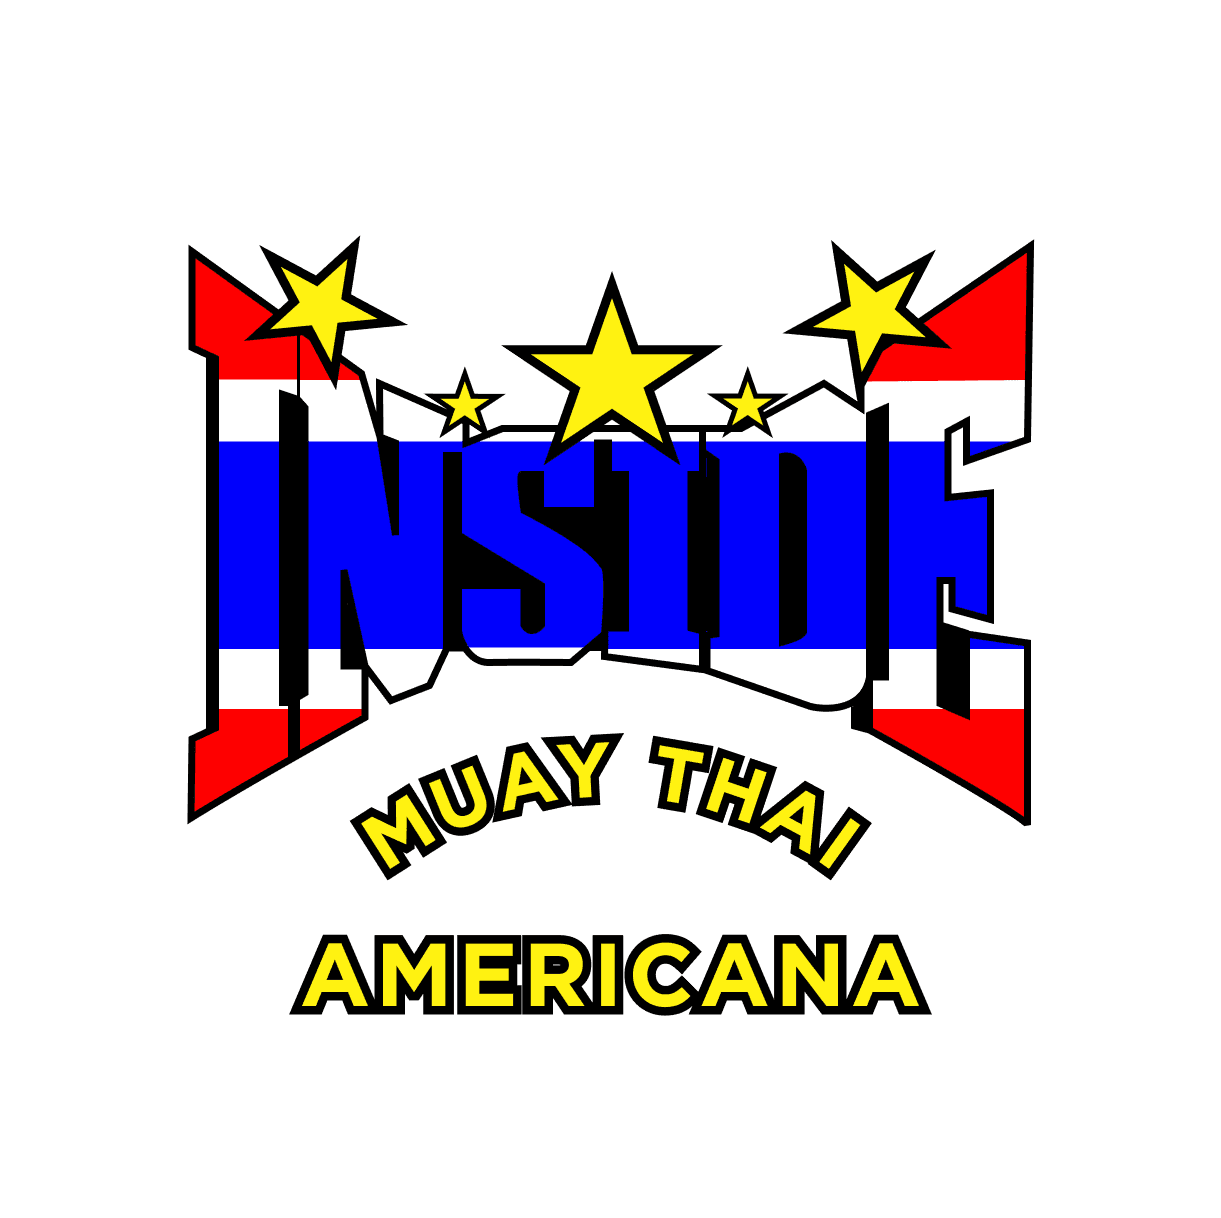 Inside americana sp